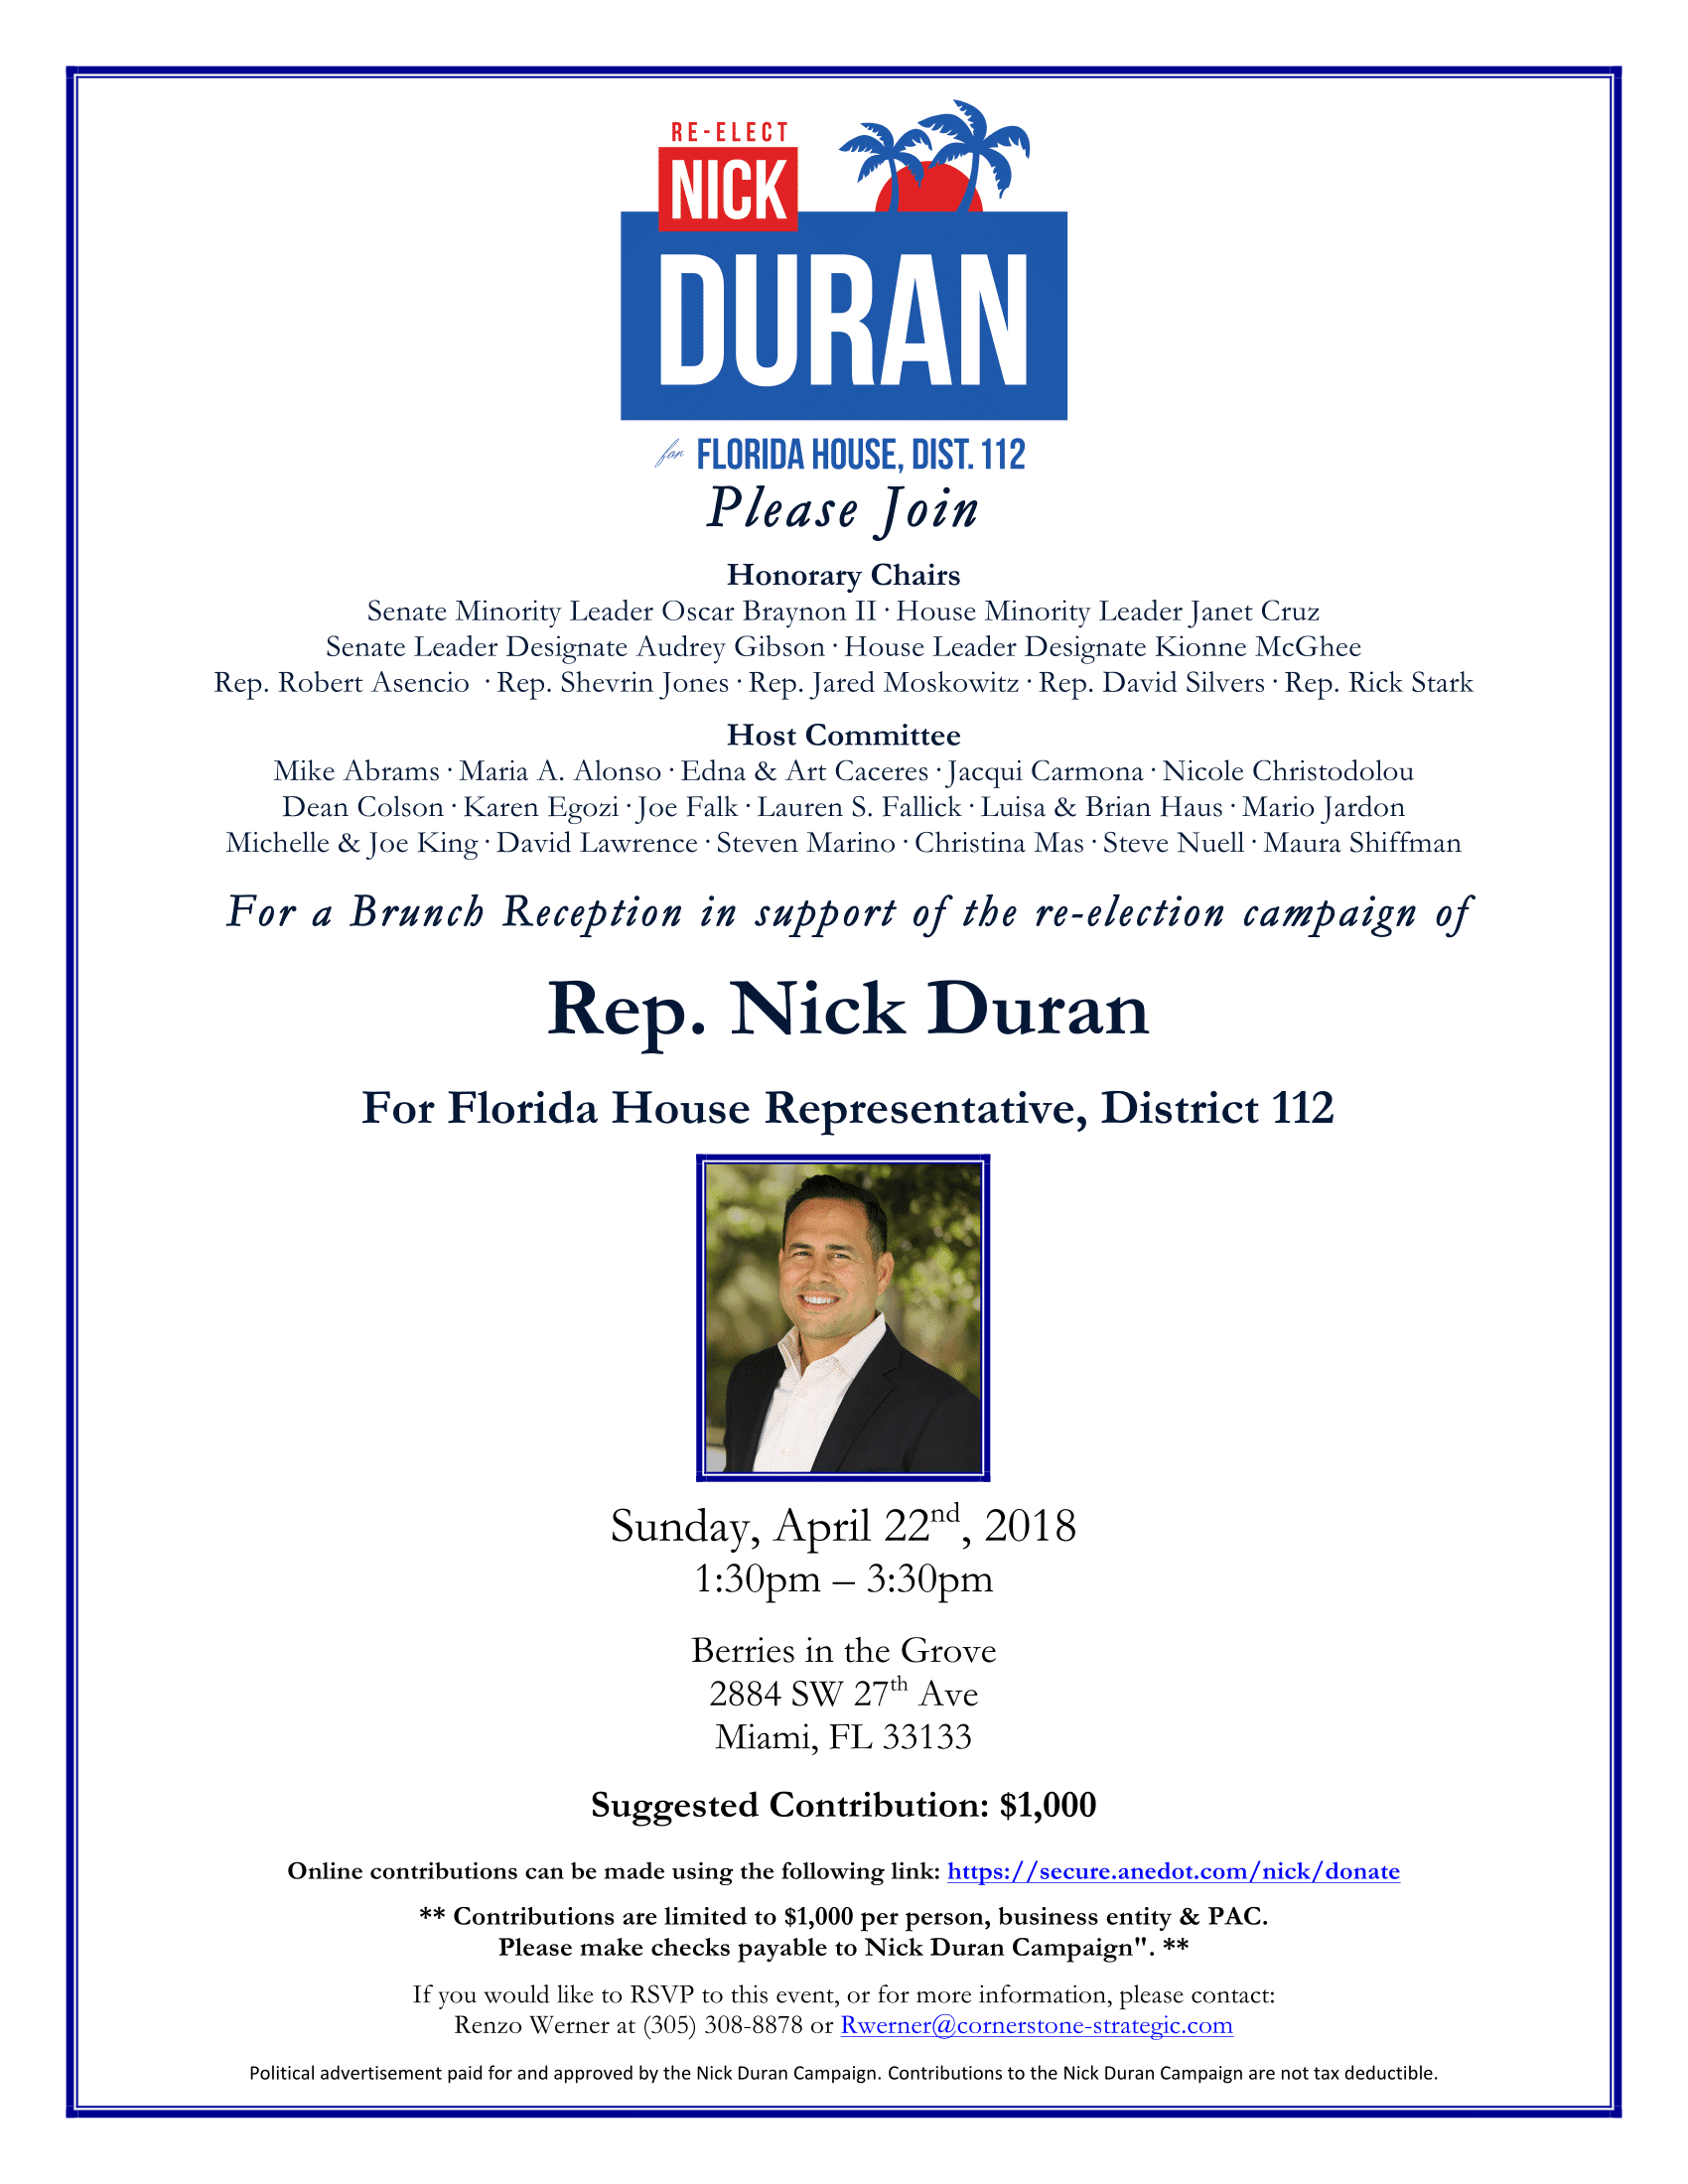 Nick Duran - 4.22.2018 fundraiser invite